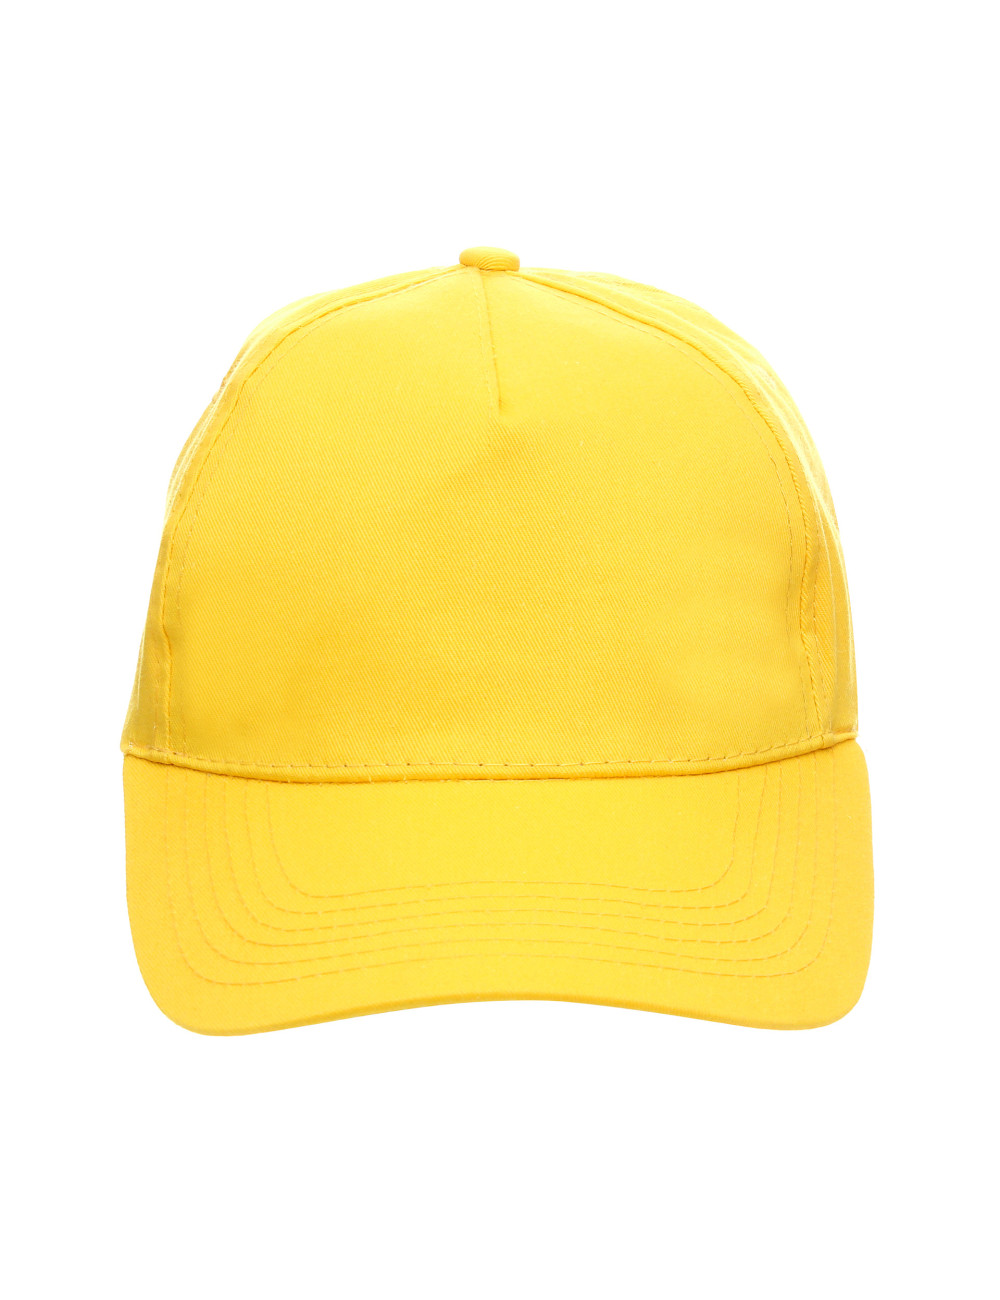 Cap classic yellow Promostars